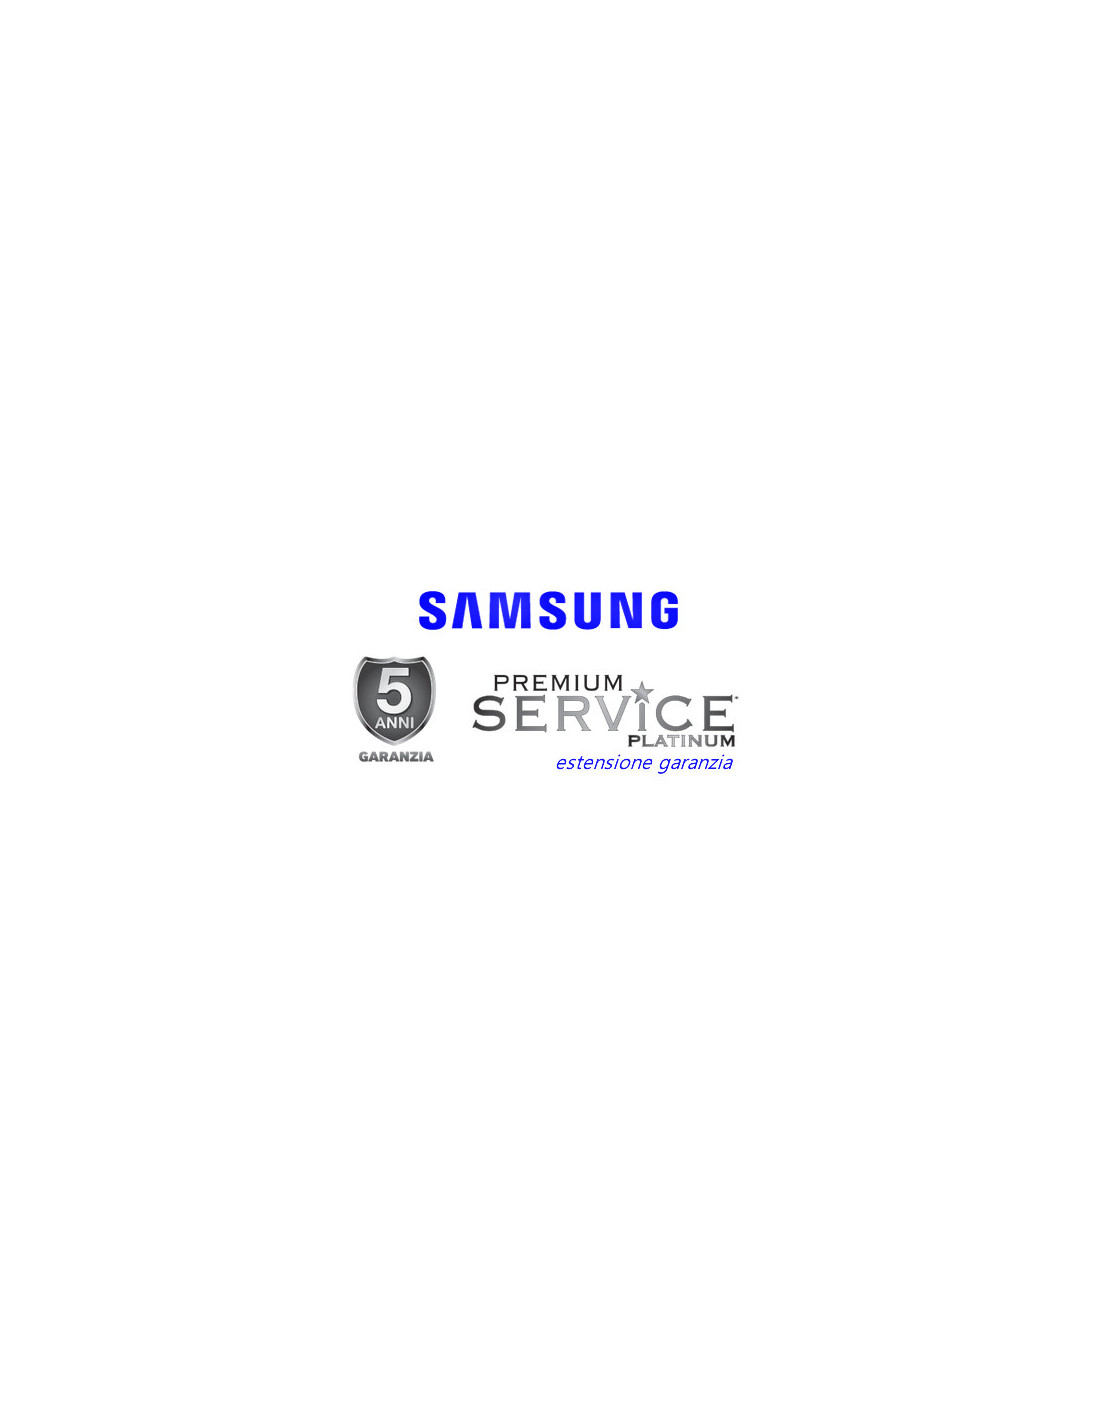 Estensione garanzia Samsung 5 anni per Trial split